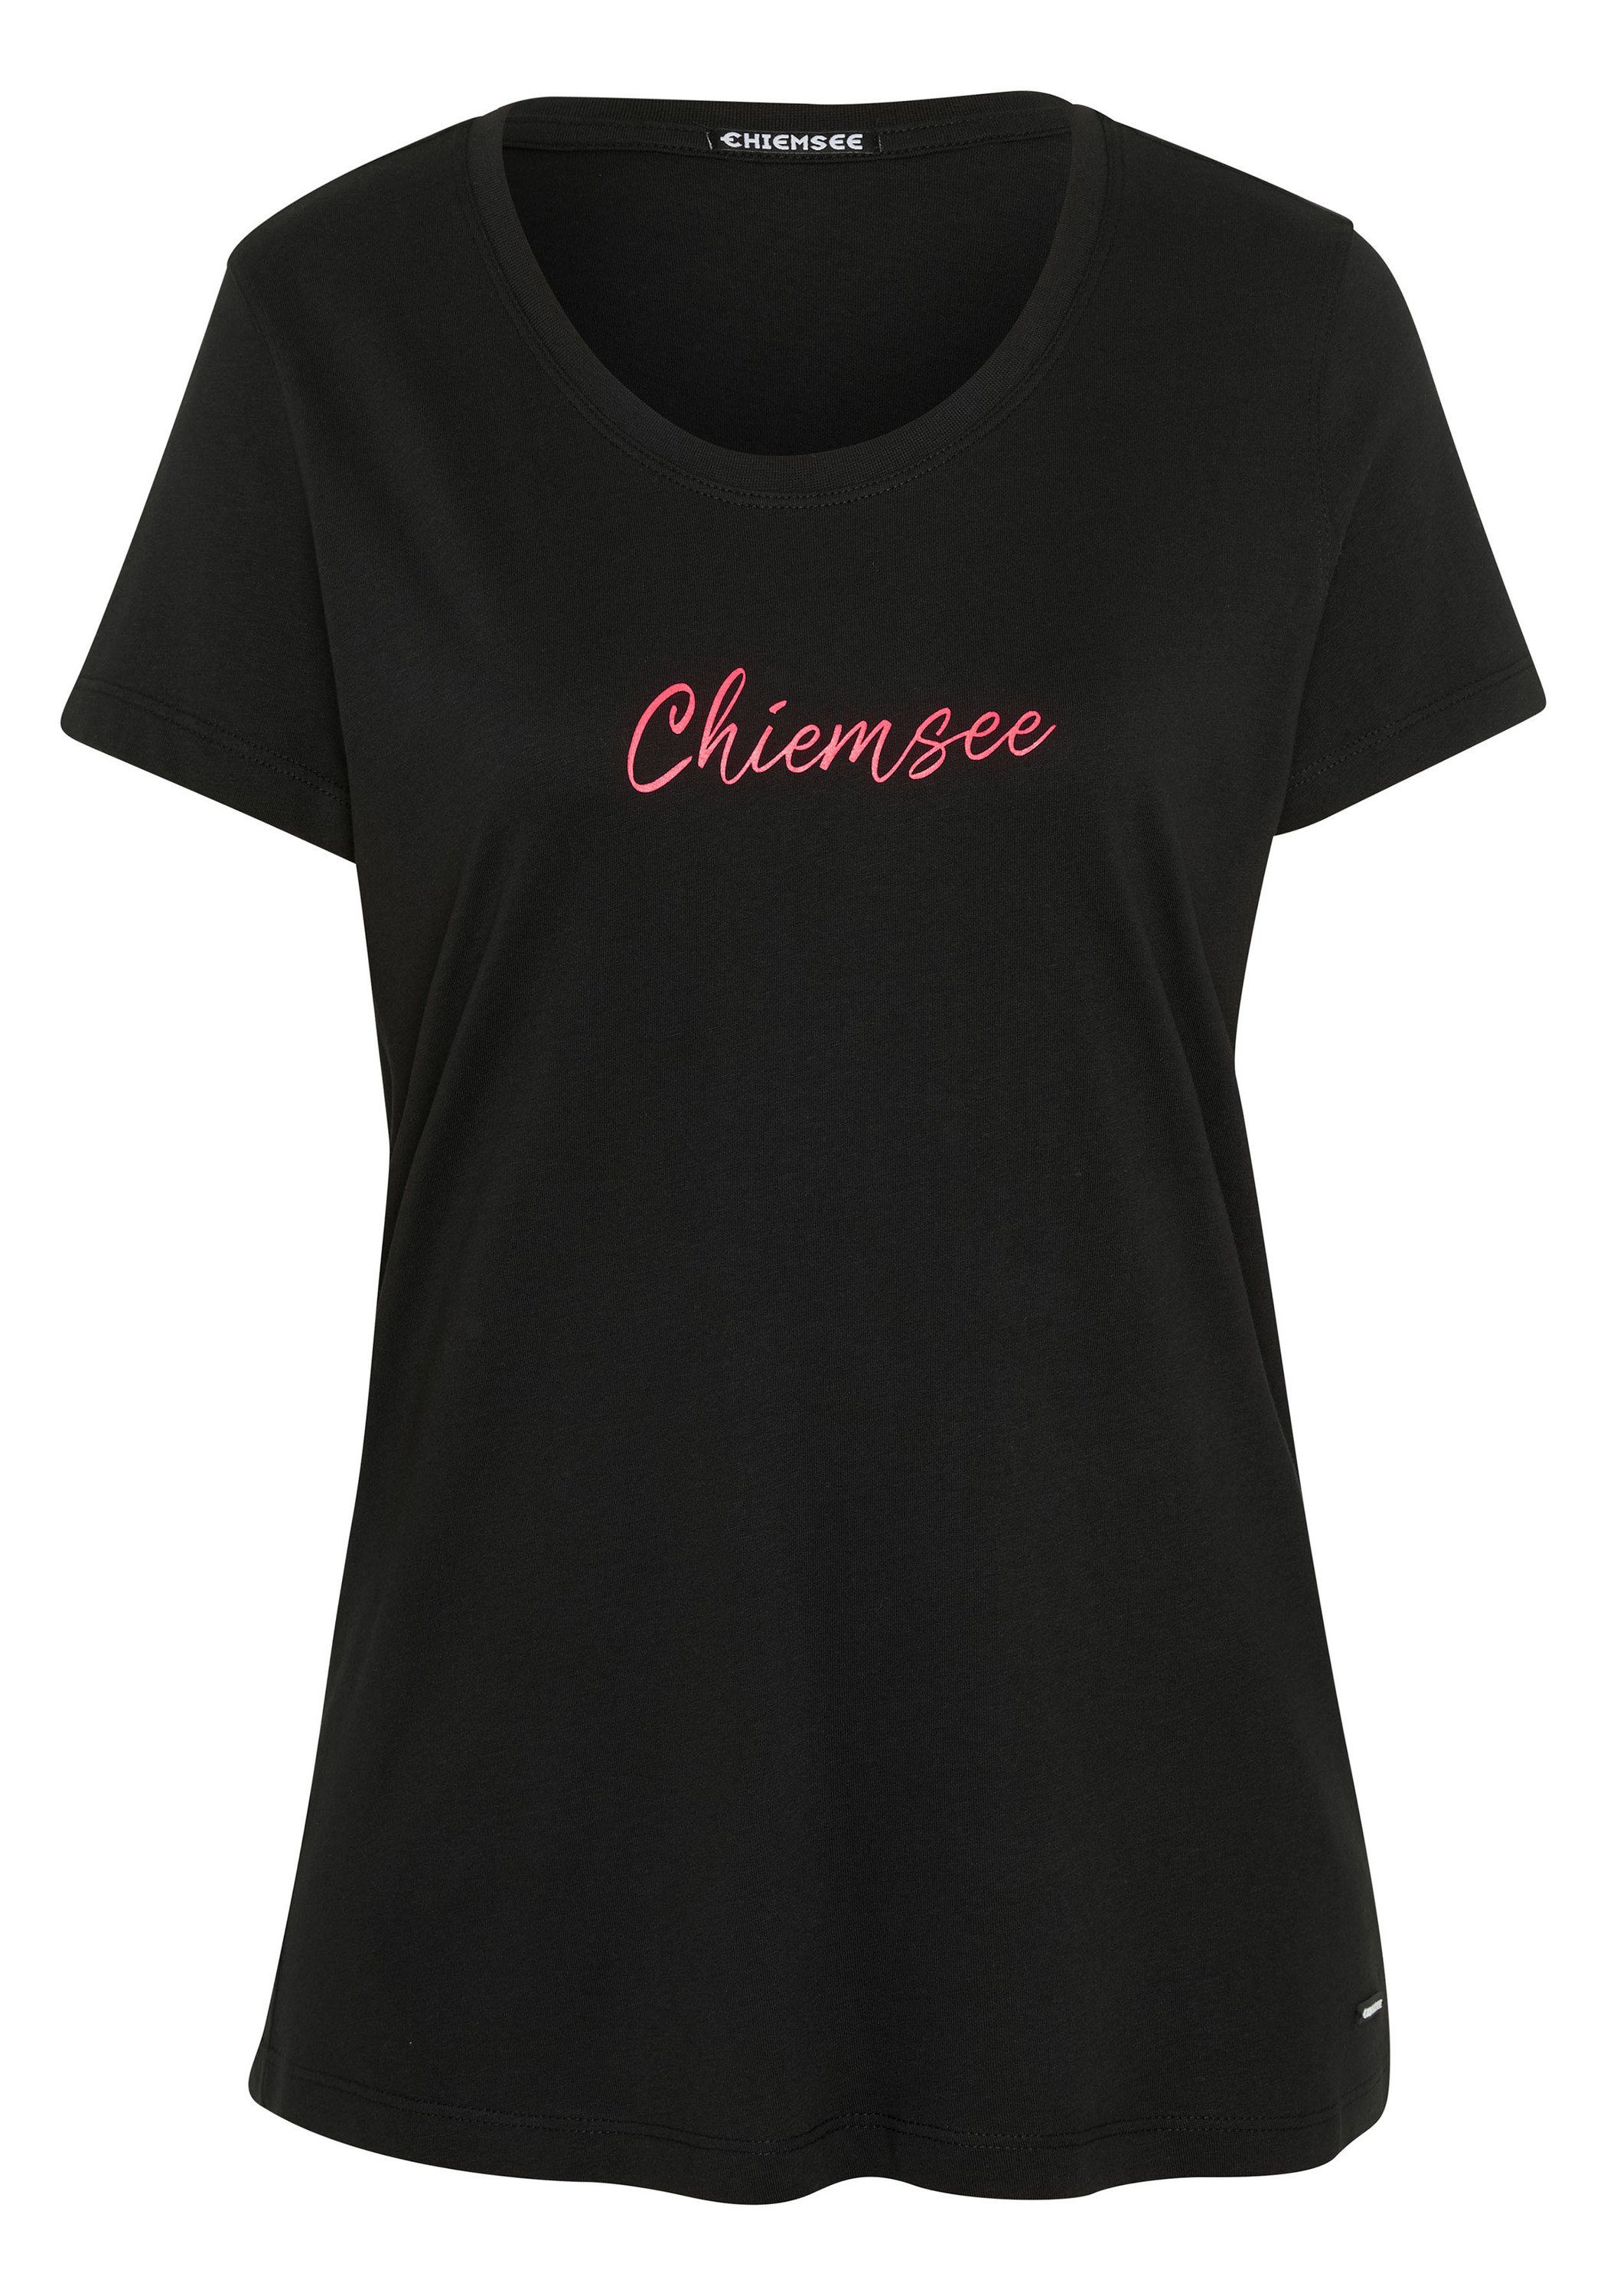 Chiemsee Print-Shirt T-Shirt im Label-Look 1 19-3911 Black Beauty